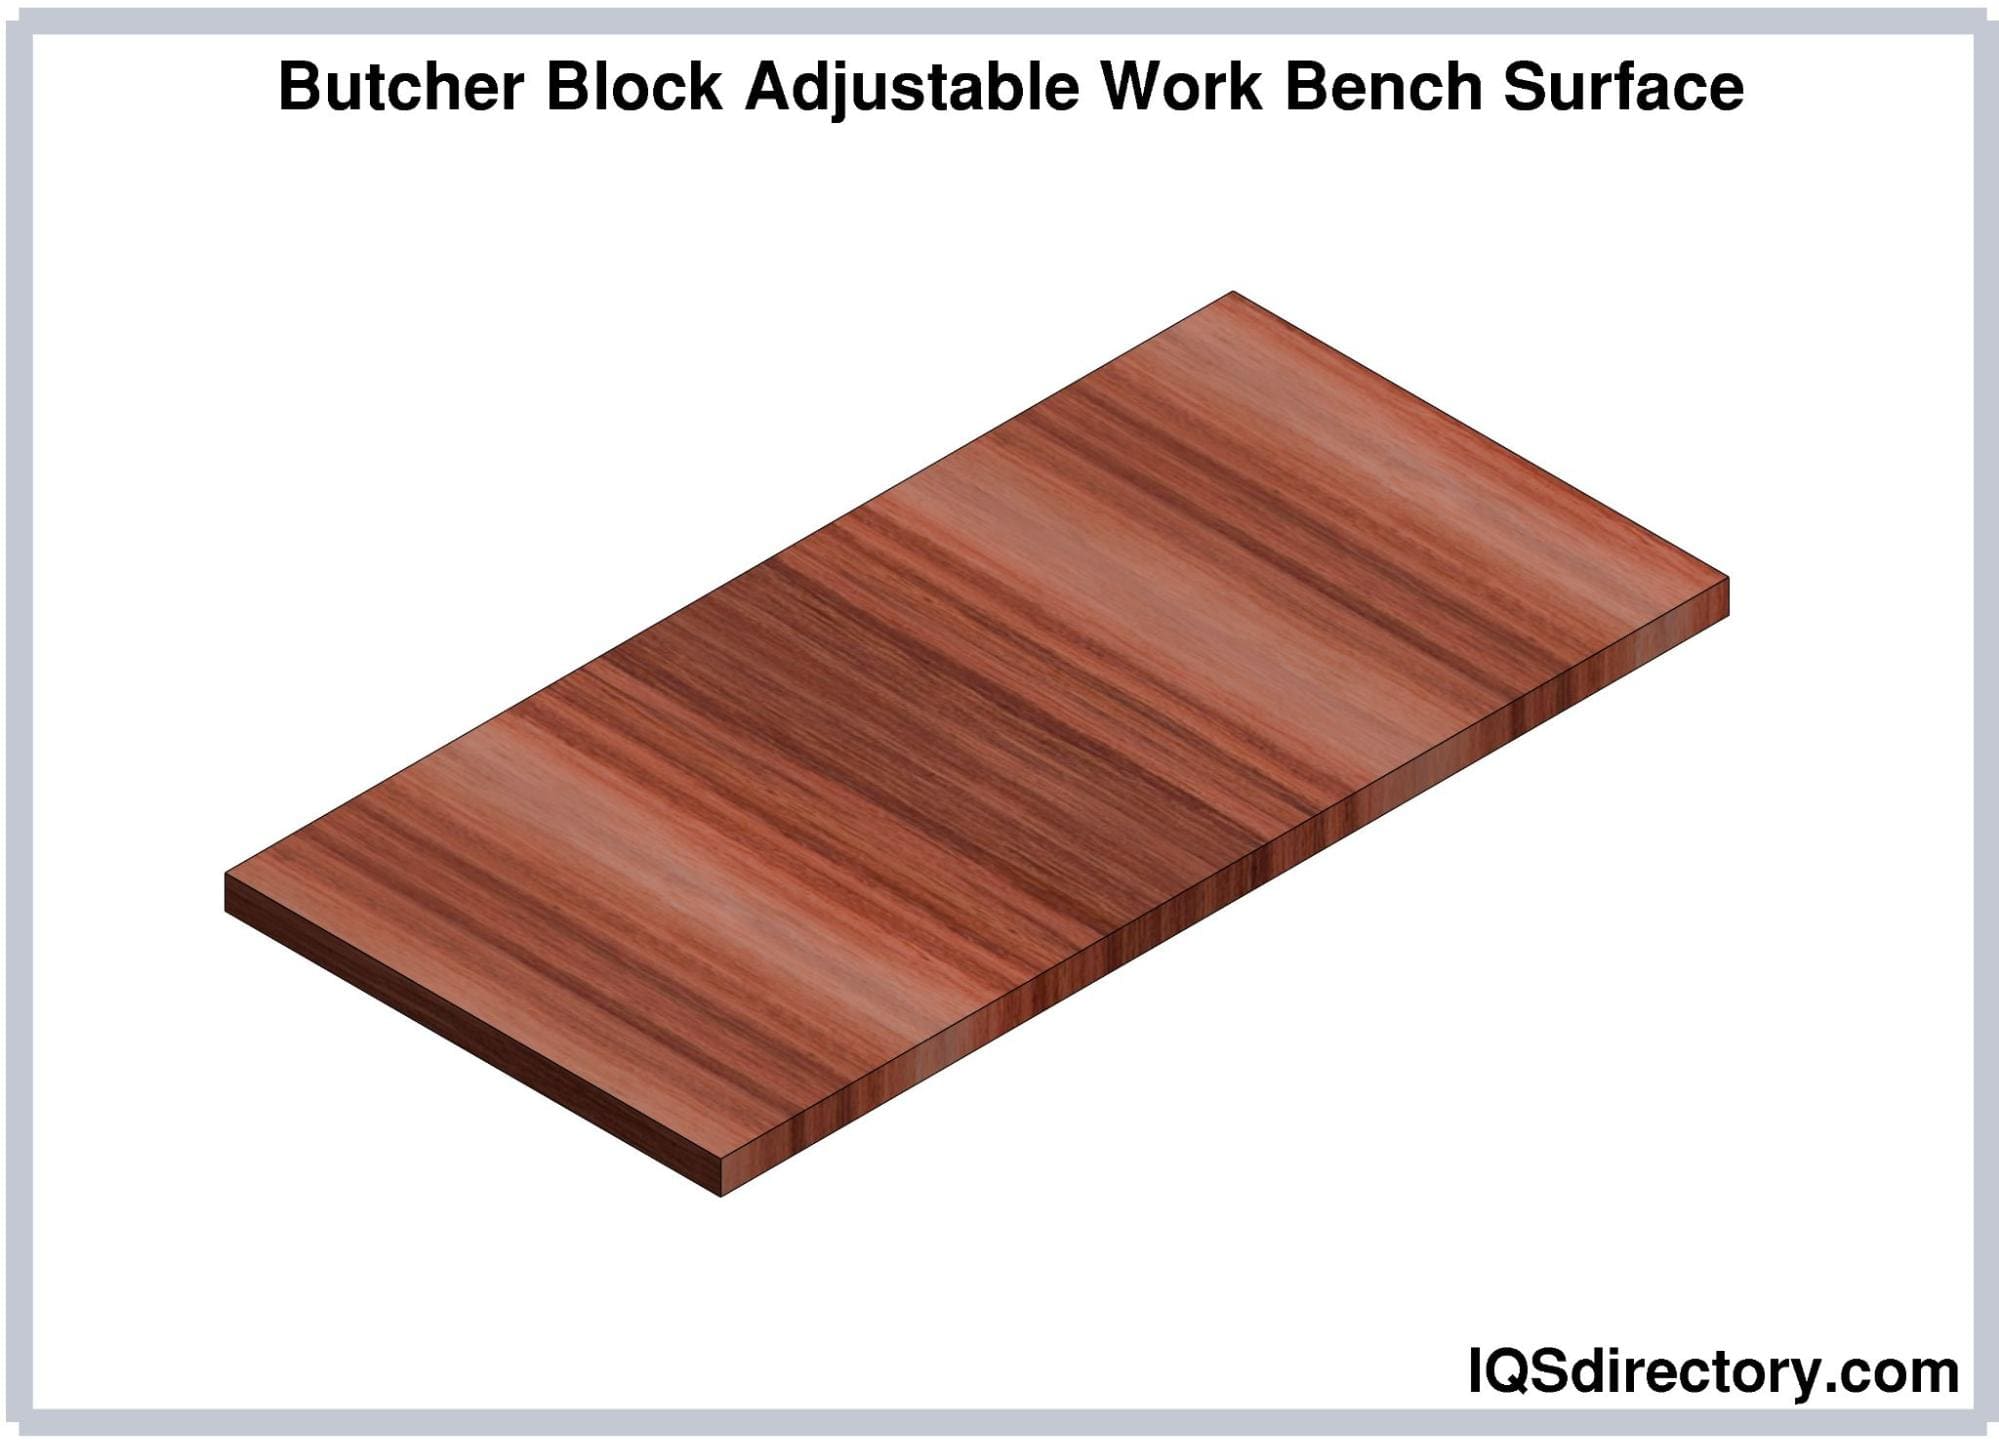 Butcher Block Adjustable Work Bench Surface